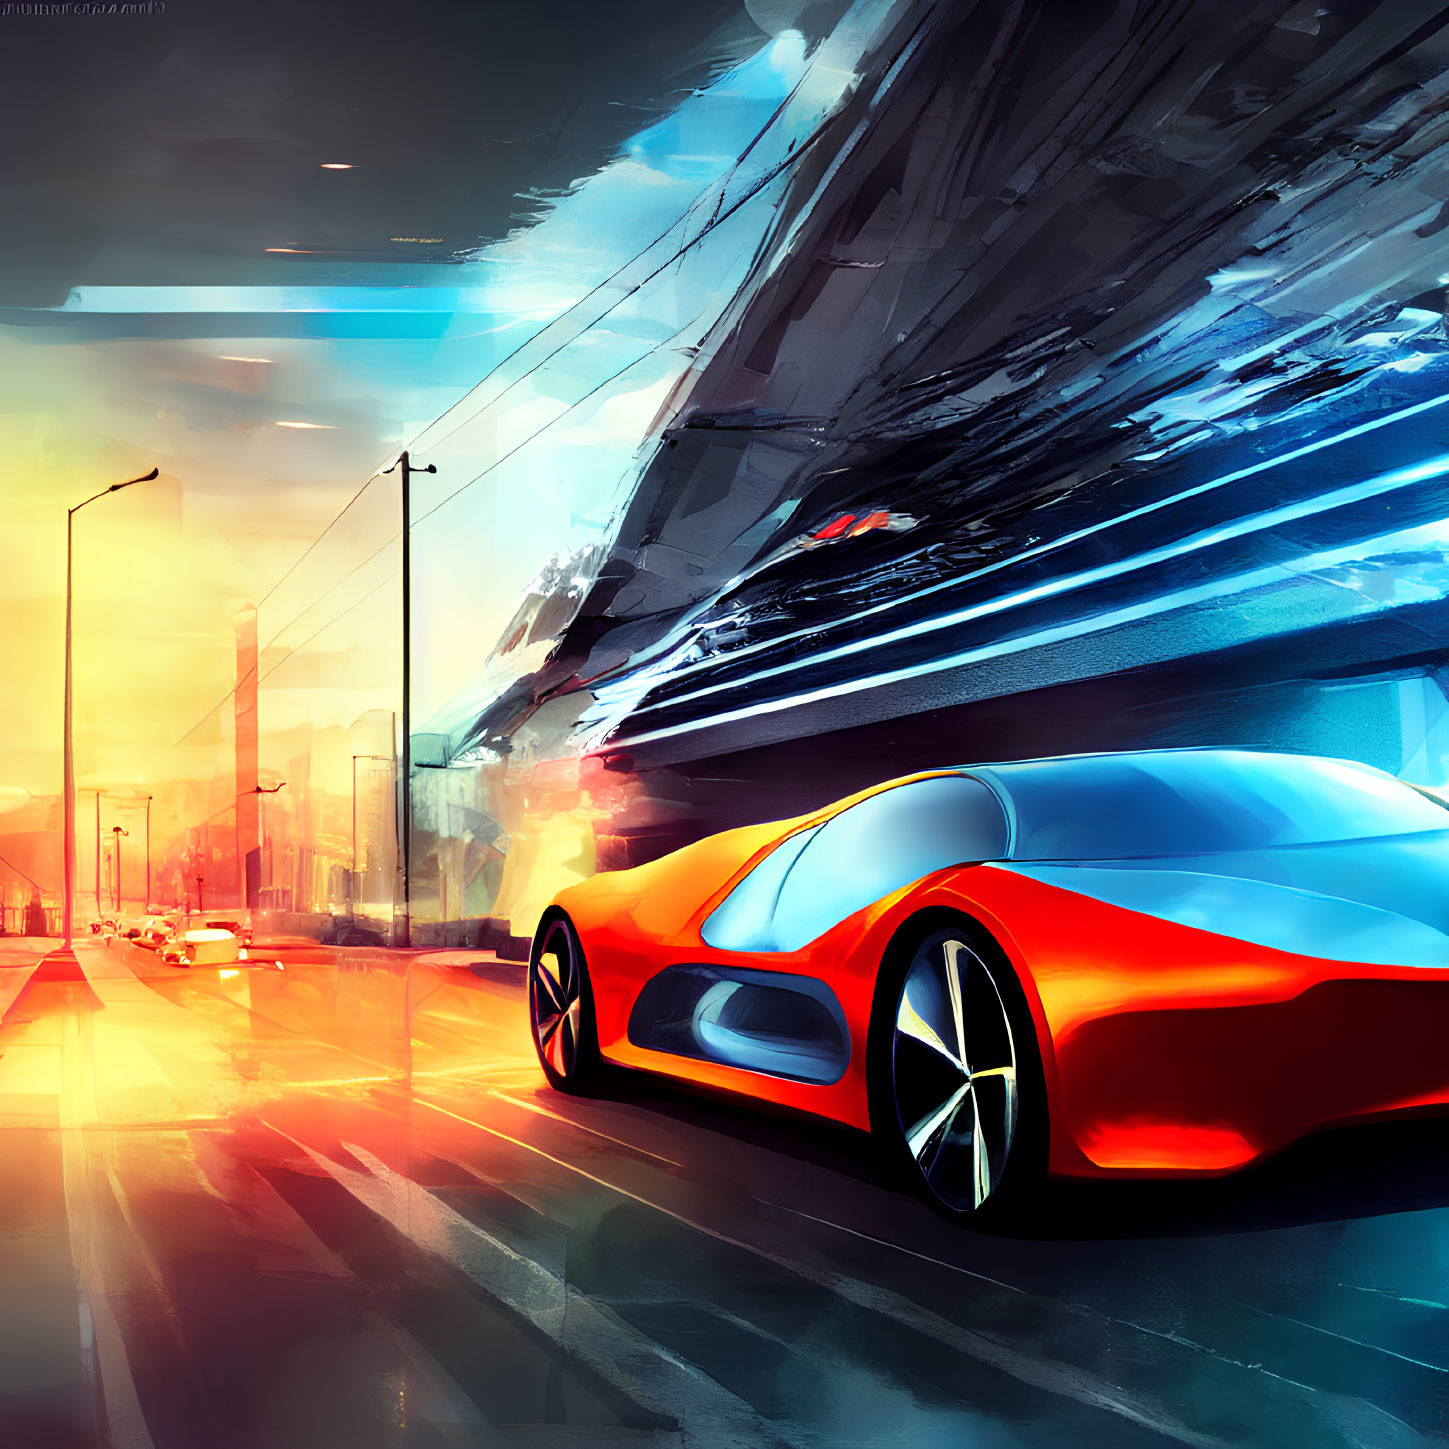 Futuristic red sports car speeding in stylized cityscape